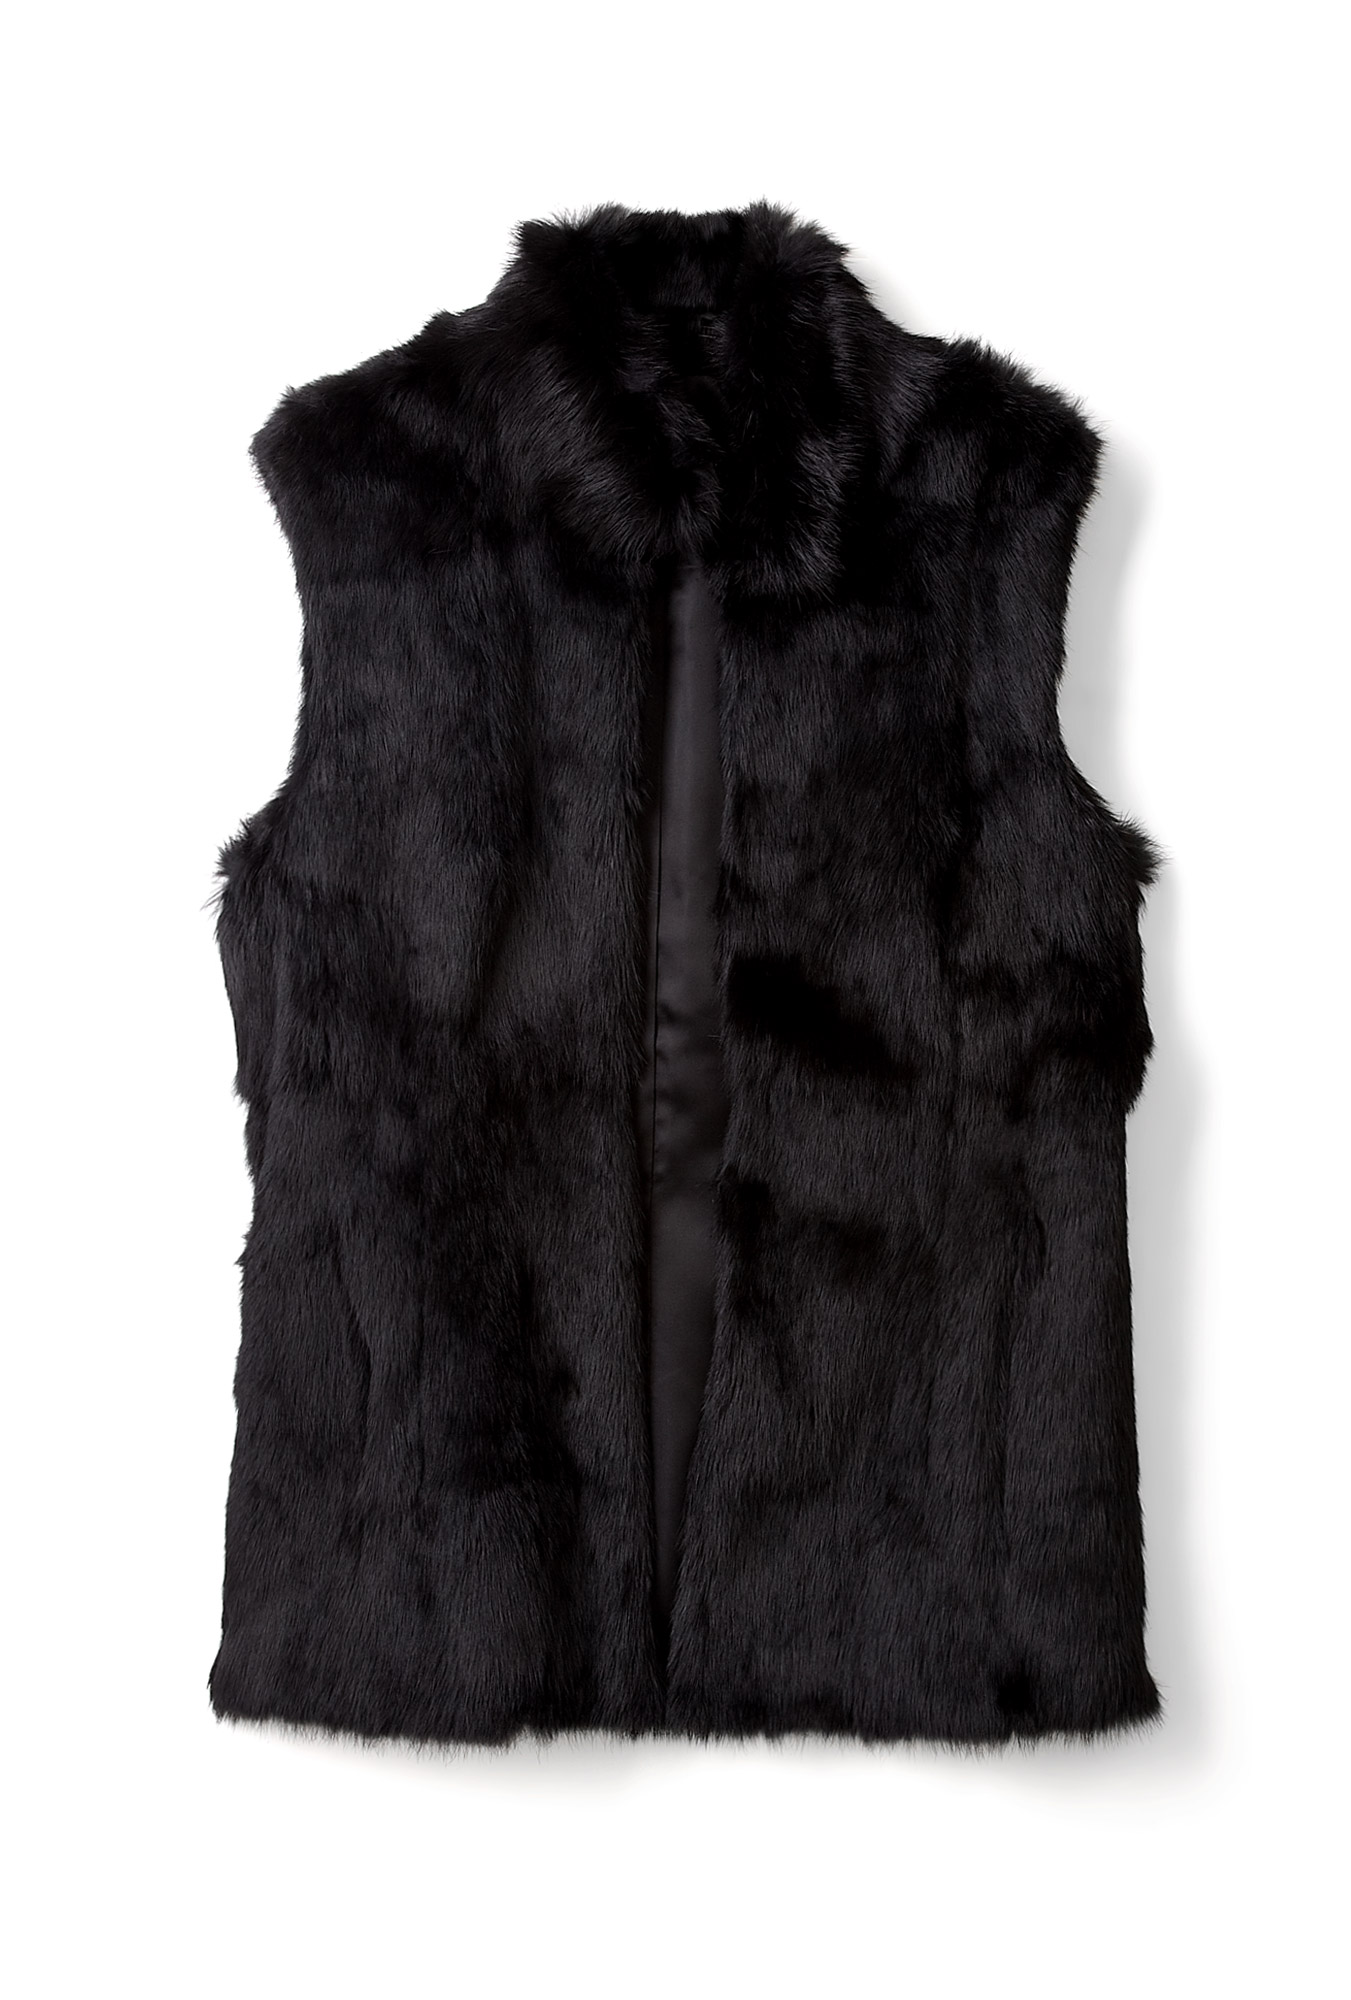 Michael Michael Kors Fur Vest in Black